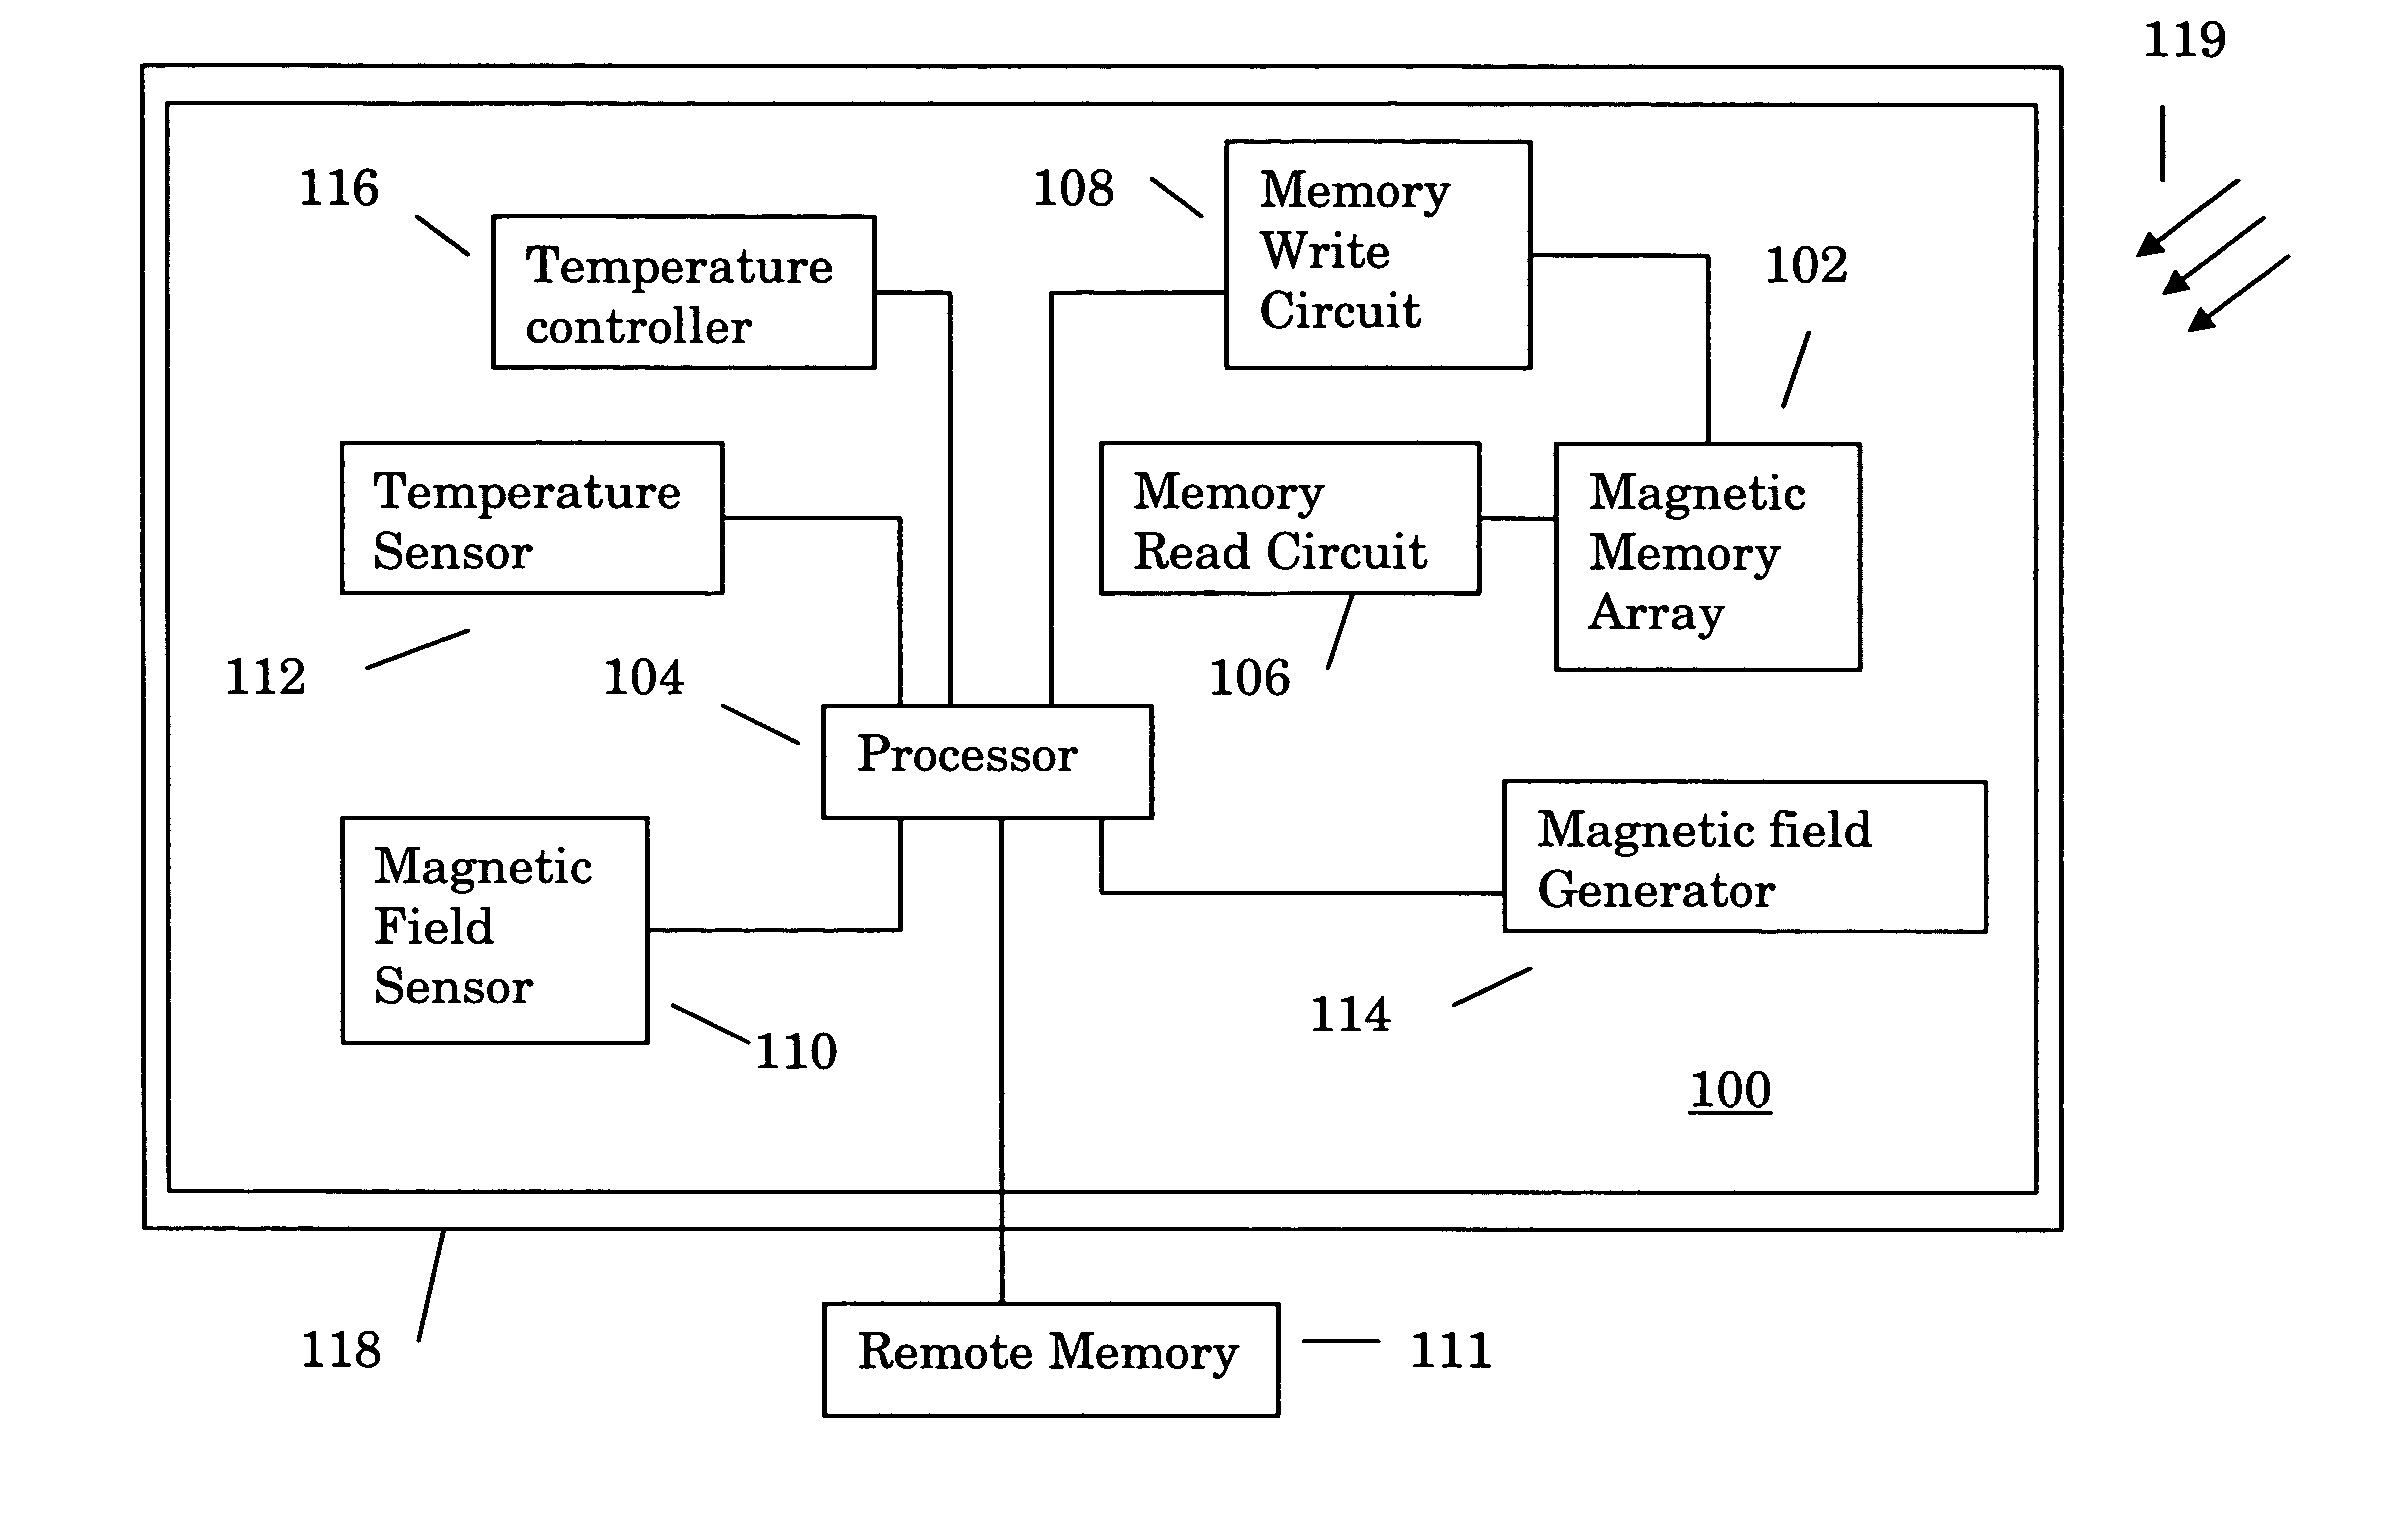 Sensor compensation for environmental variations for magnetic random access memory